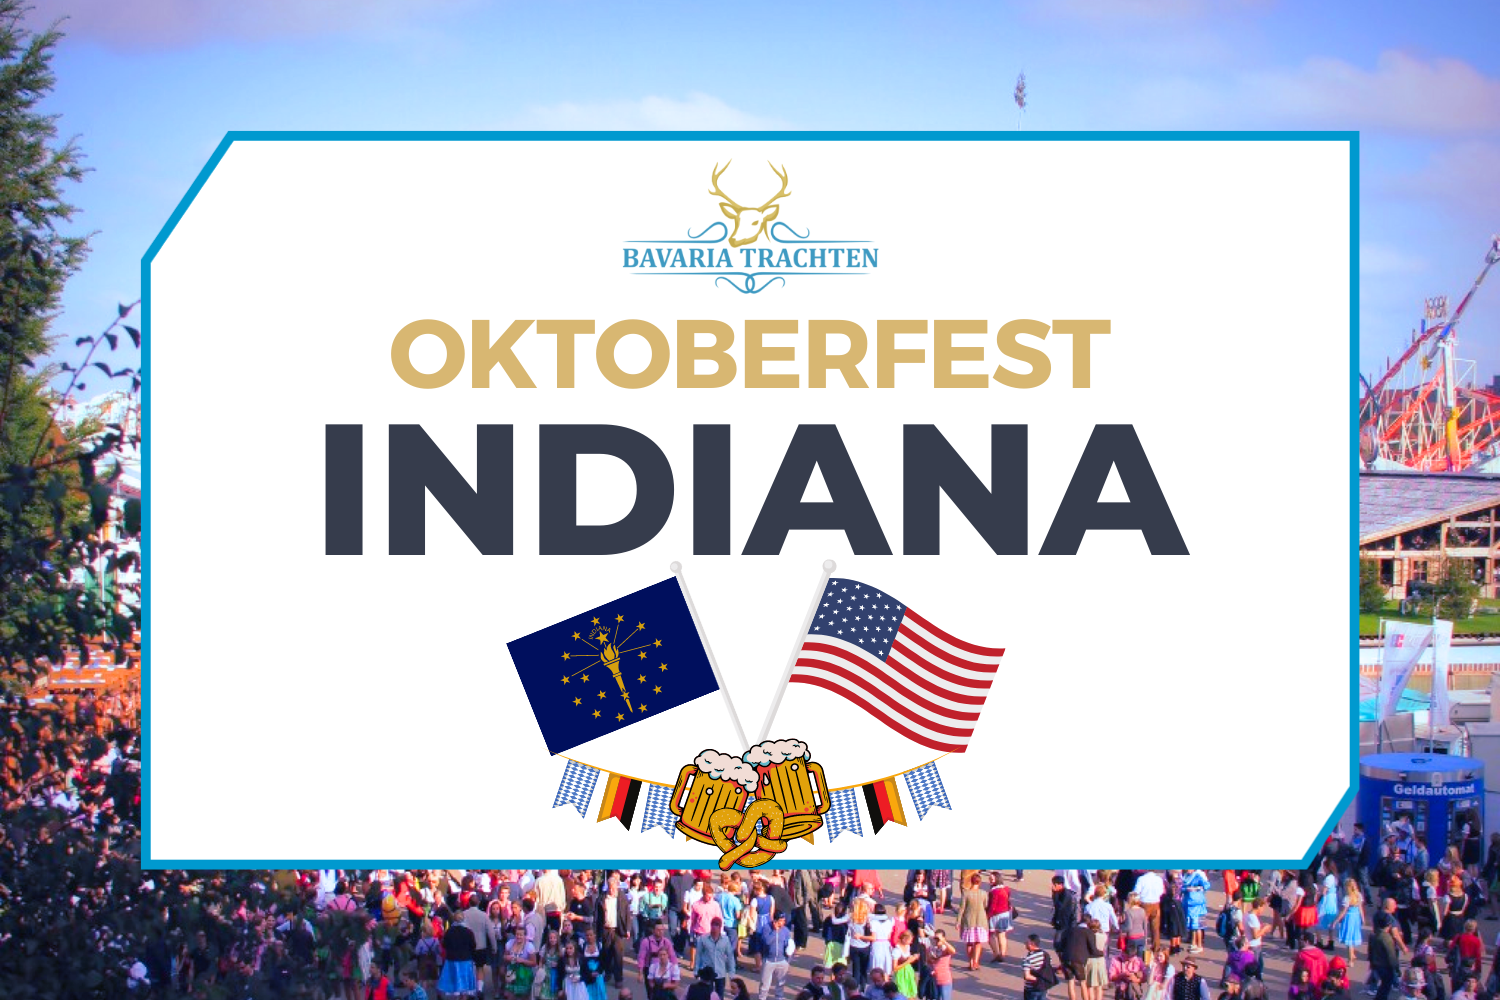 Indiana Oktoberfest Celebrate German Culture and Traditions Bavaria